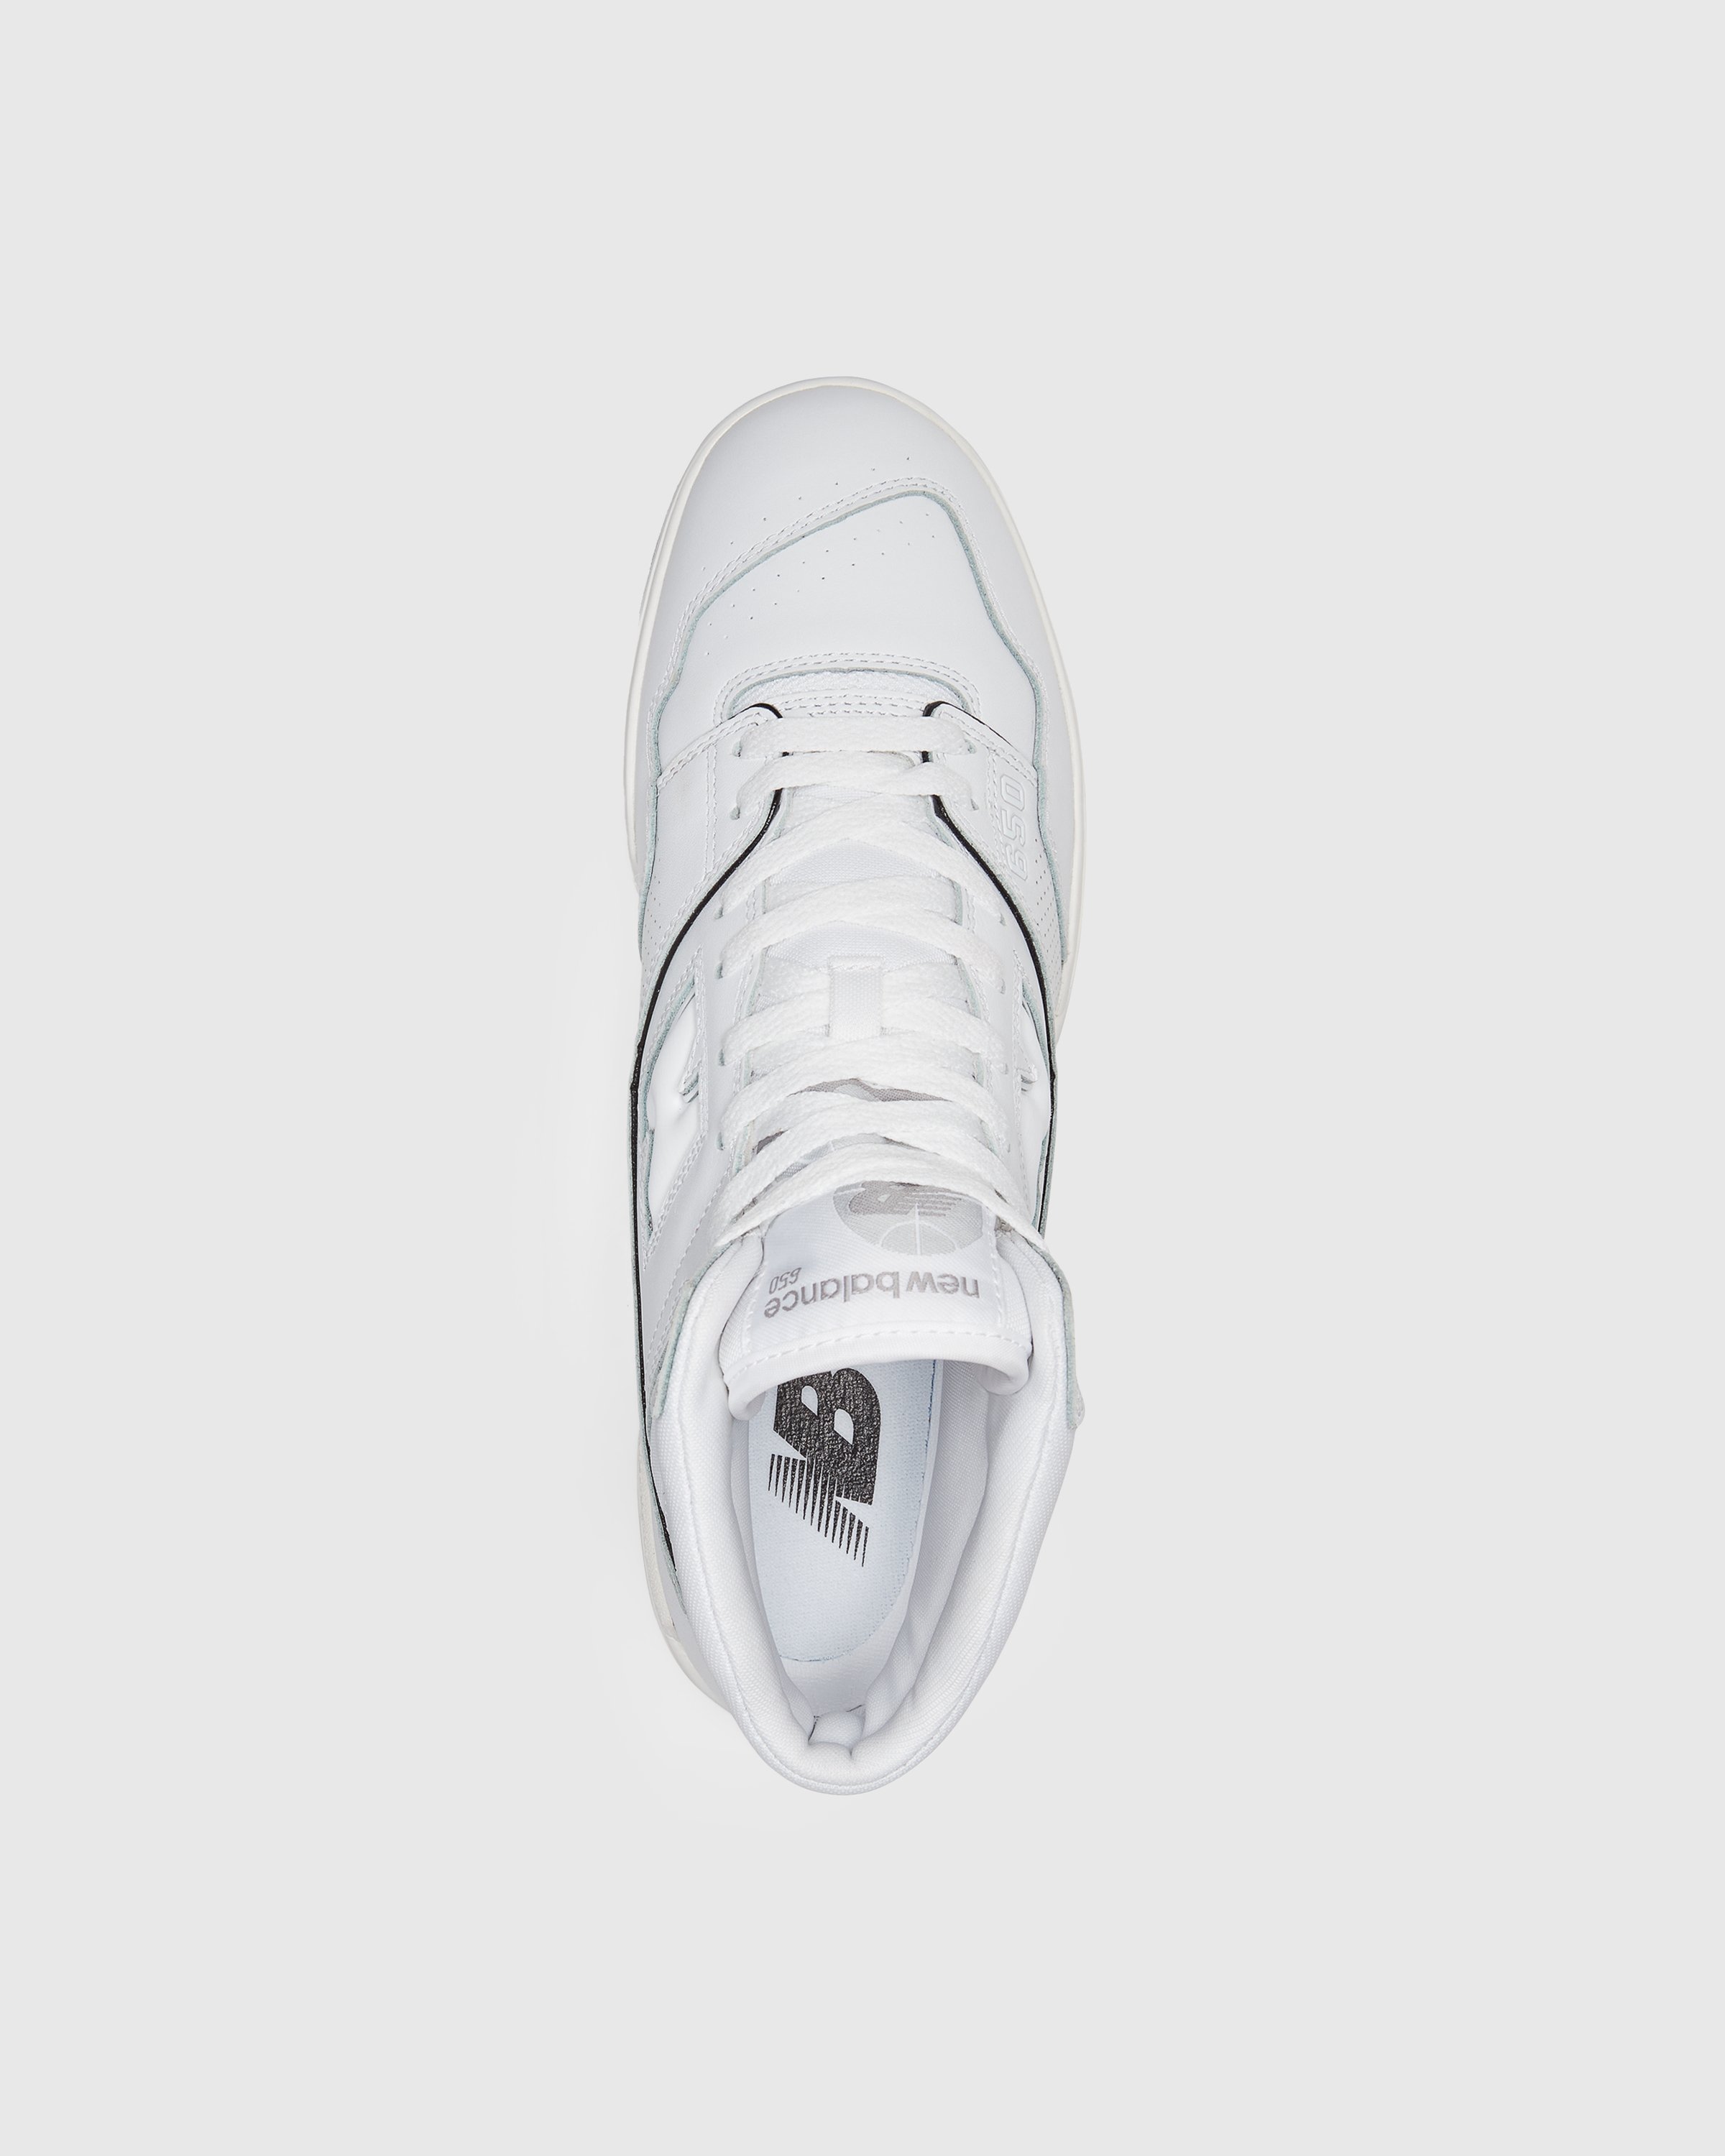 New Balance - BB 650 RWW White - Footwear - White - Image 5